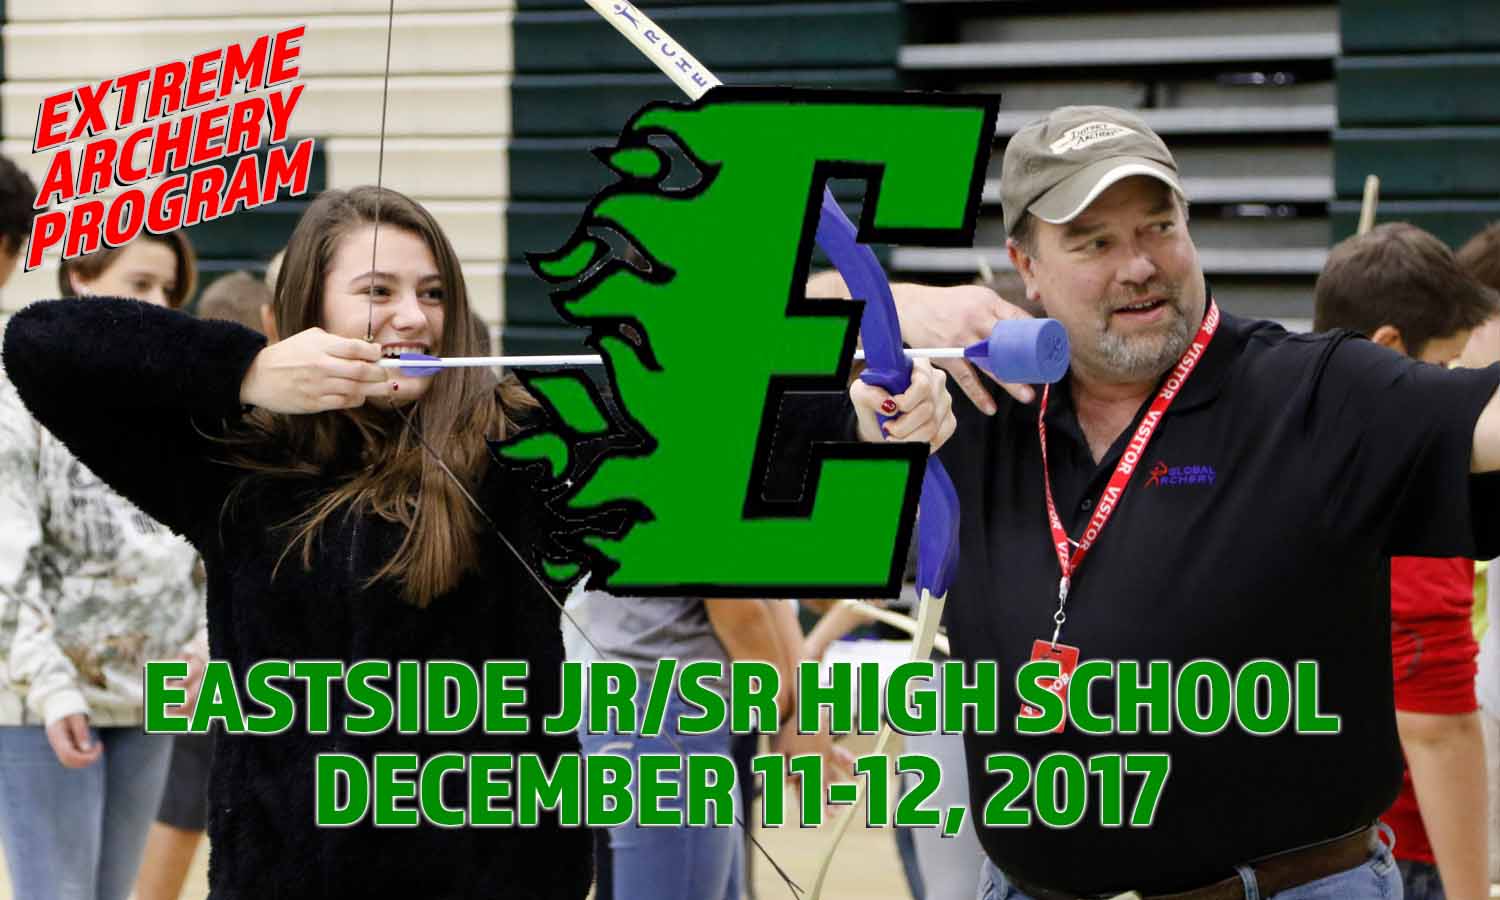 Eastside Jr/Sr High School Extreme Archery Program